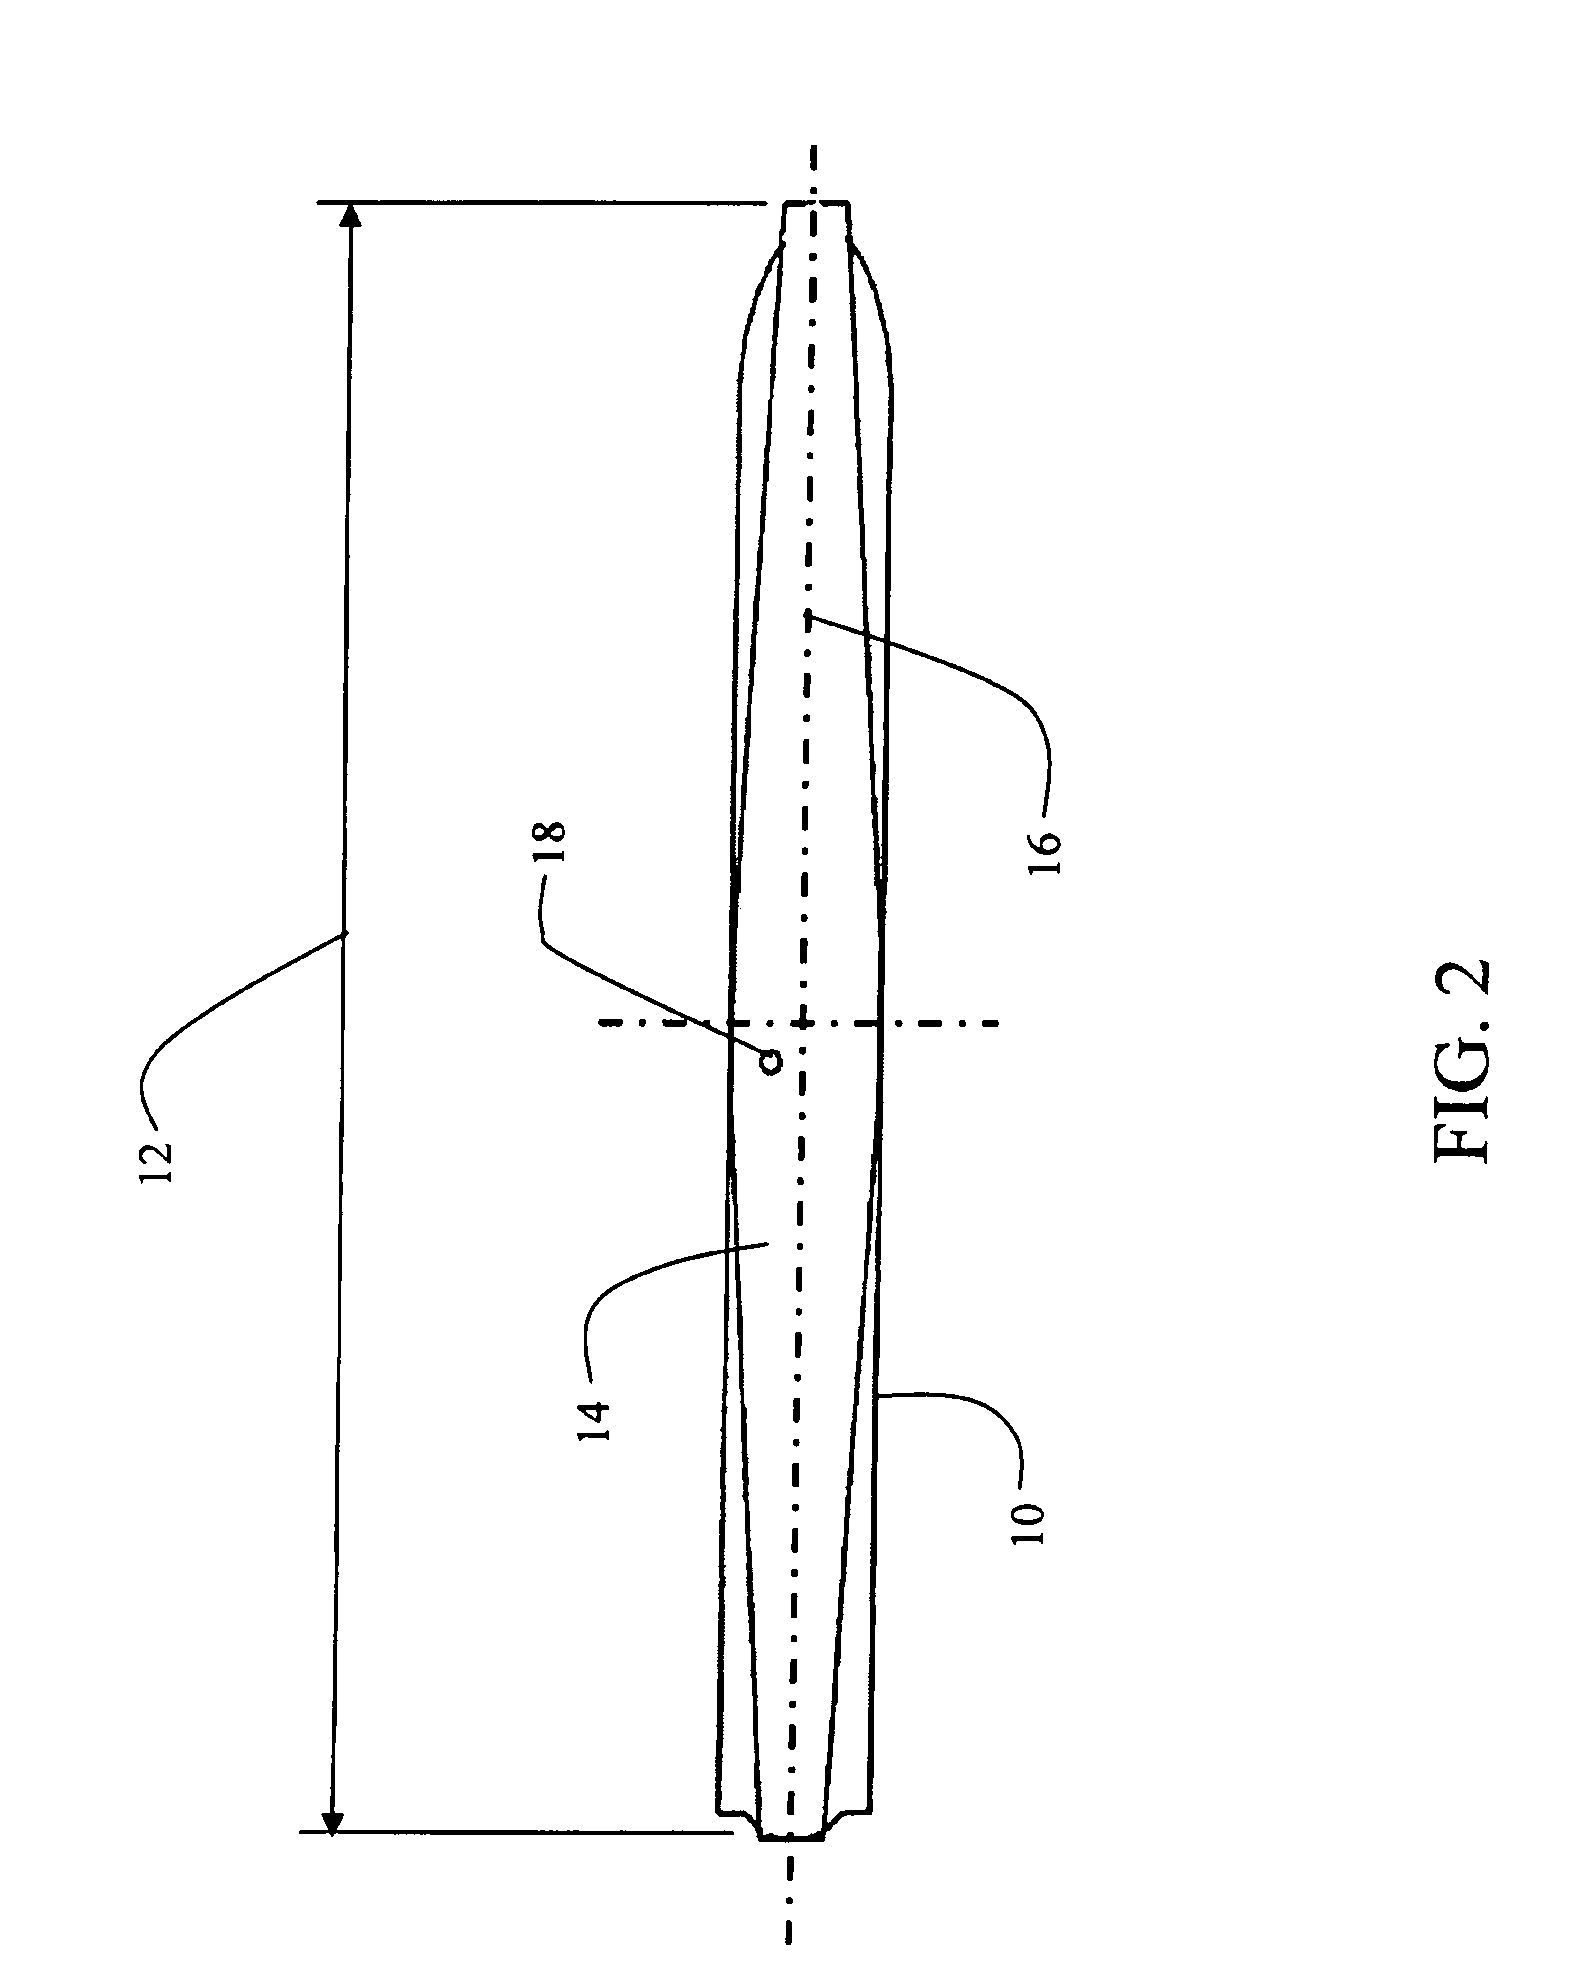 Air vehicle wing pivot